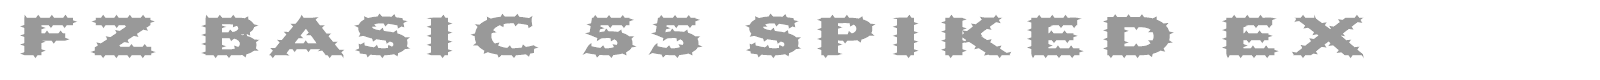 Font FZ BASIC 55 SPIKED EX